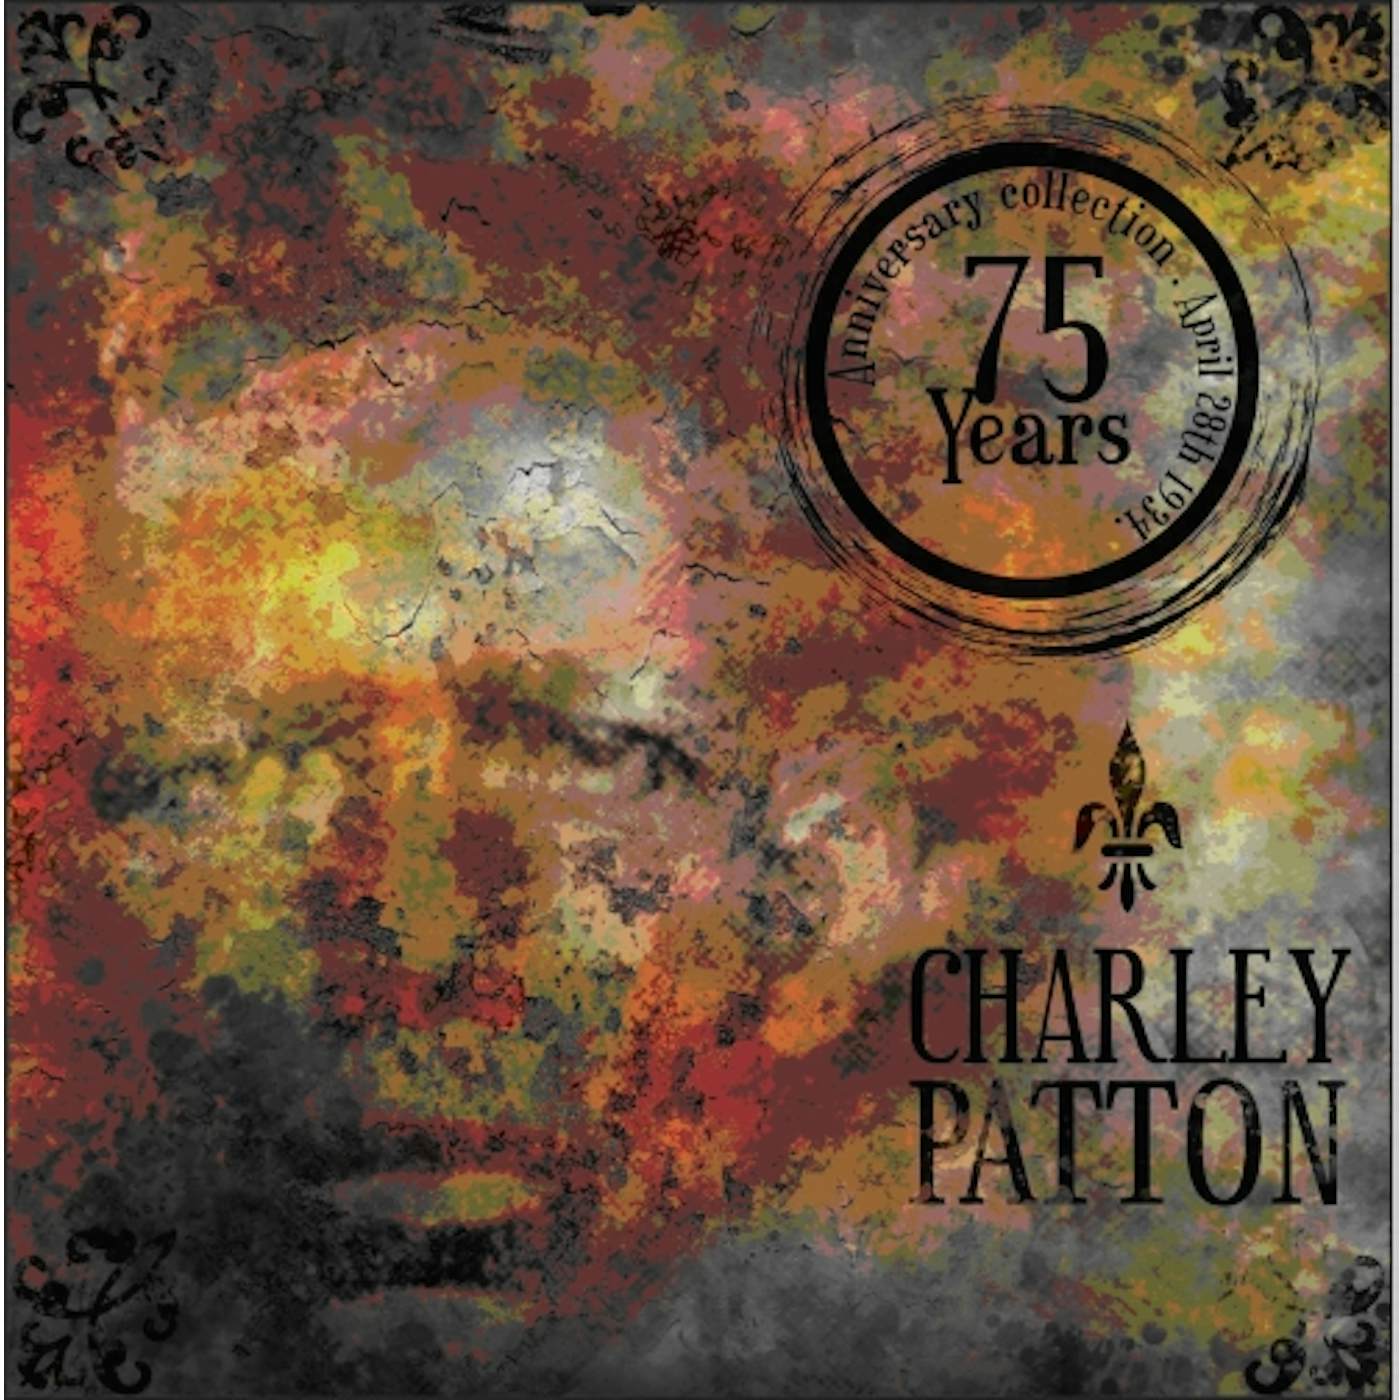 Charley Patton 75 YEAR ANNIVERSARY EDITION CD